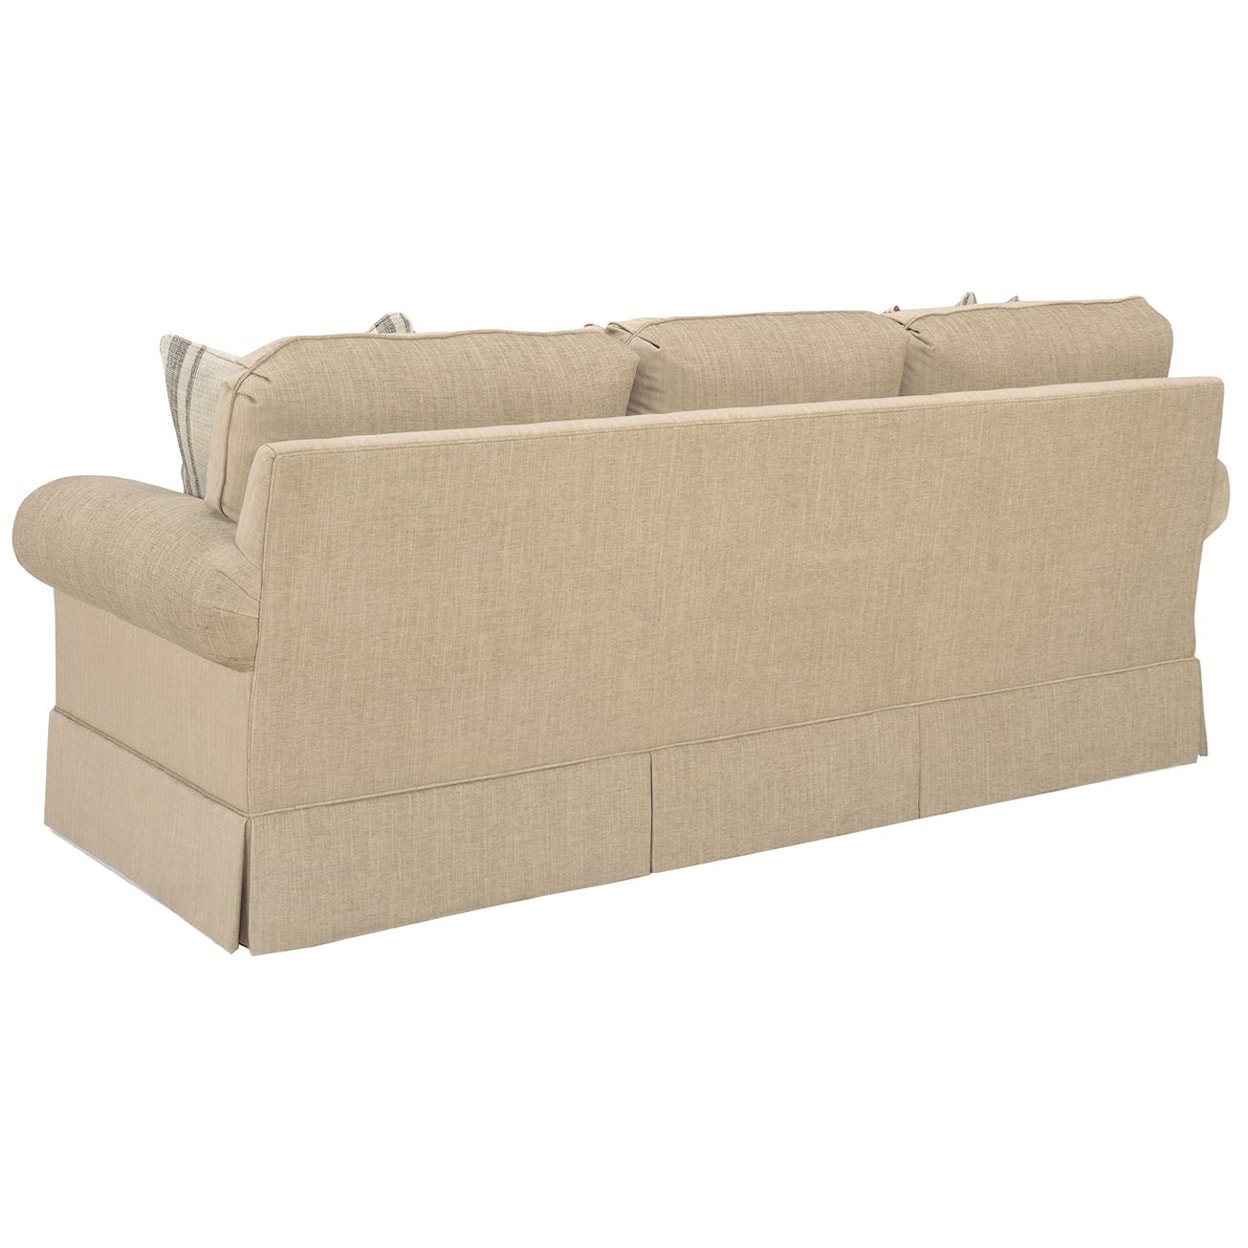 Lexington Personal Design Series Bedford Customizable Sleeper Sofa